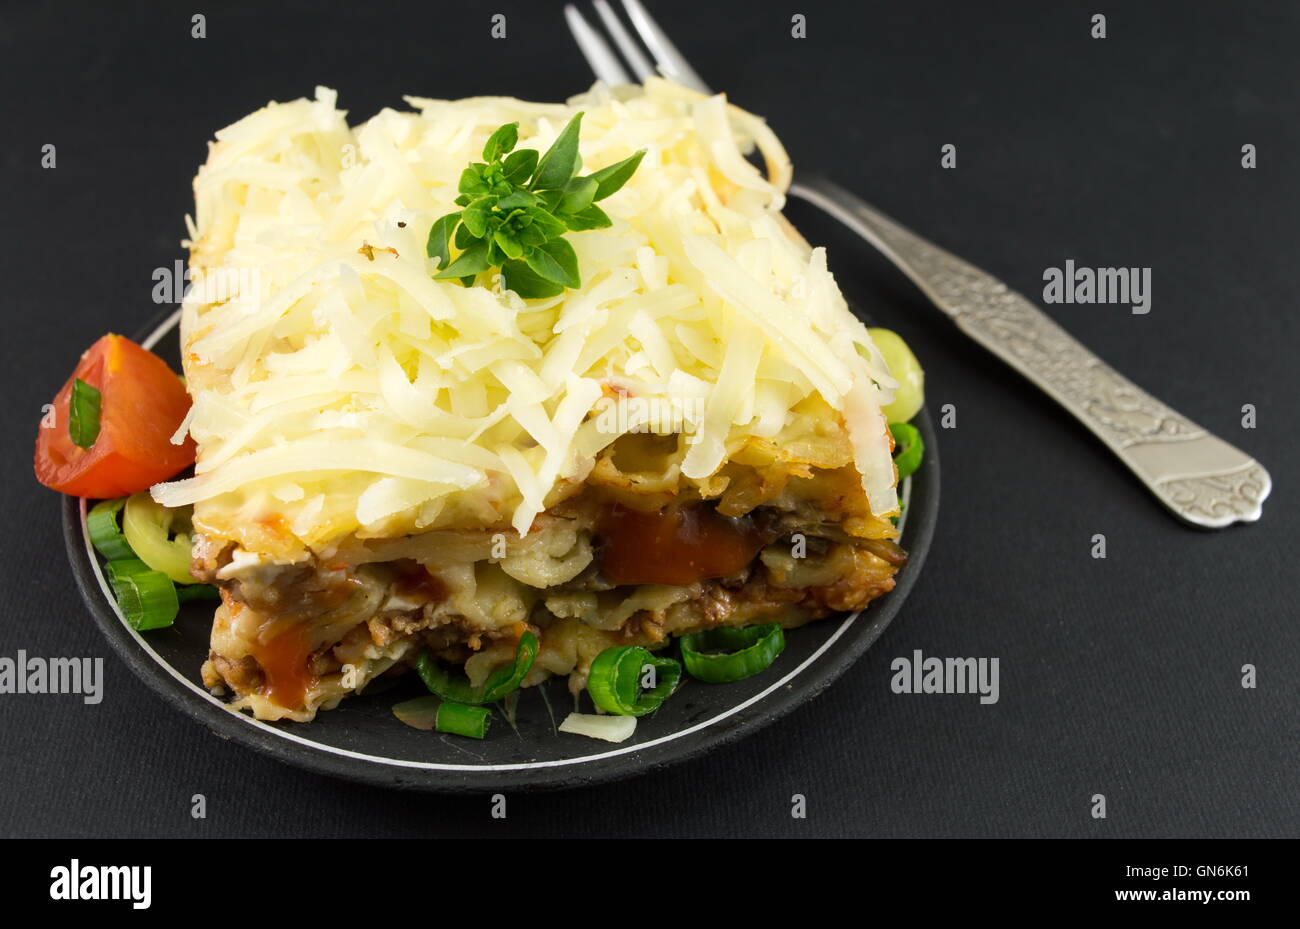 Porzione di lasagne con verdure al buio su un tavolo Foto Stock